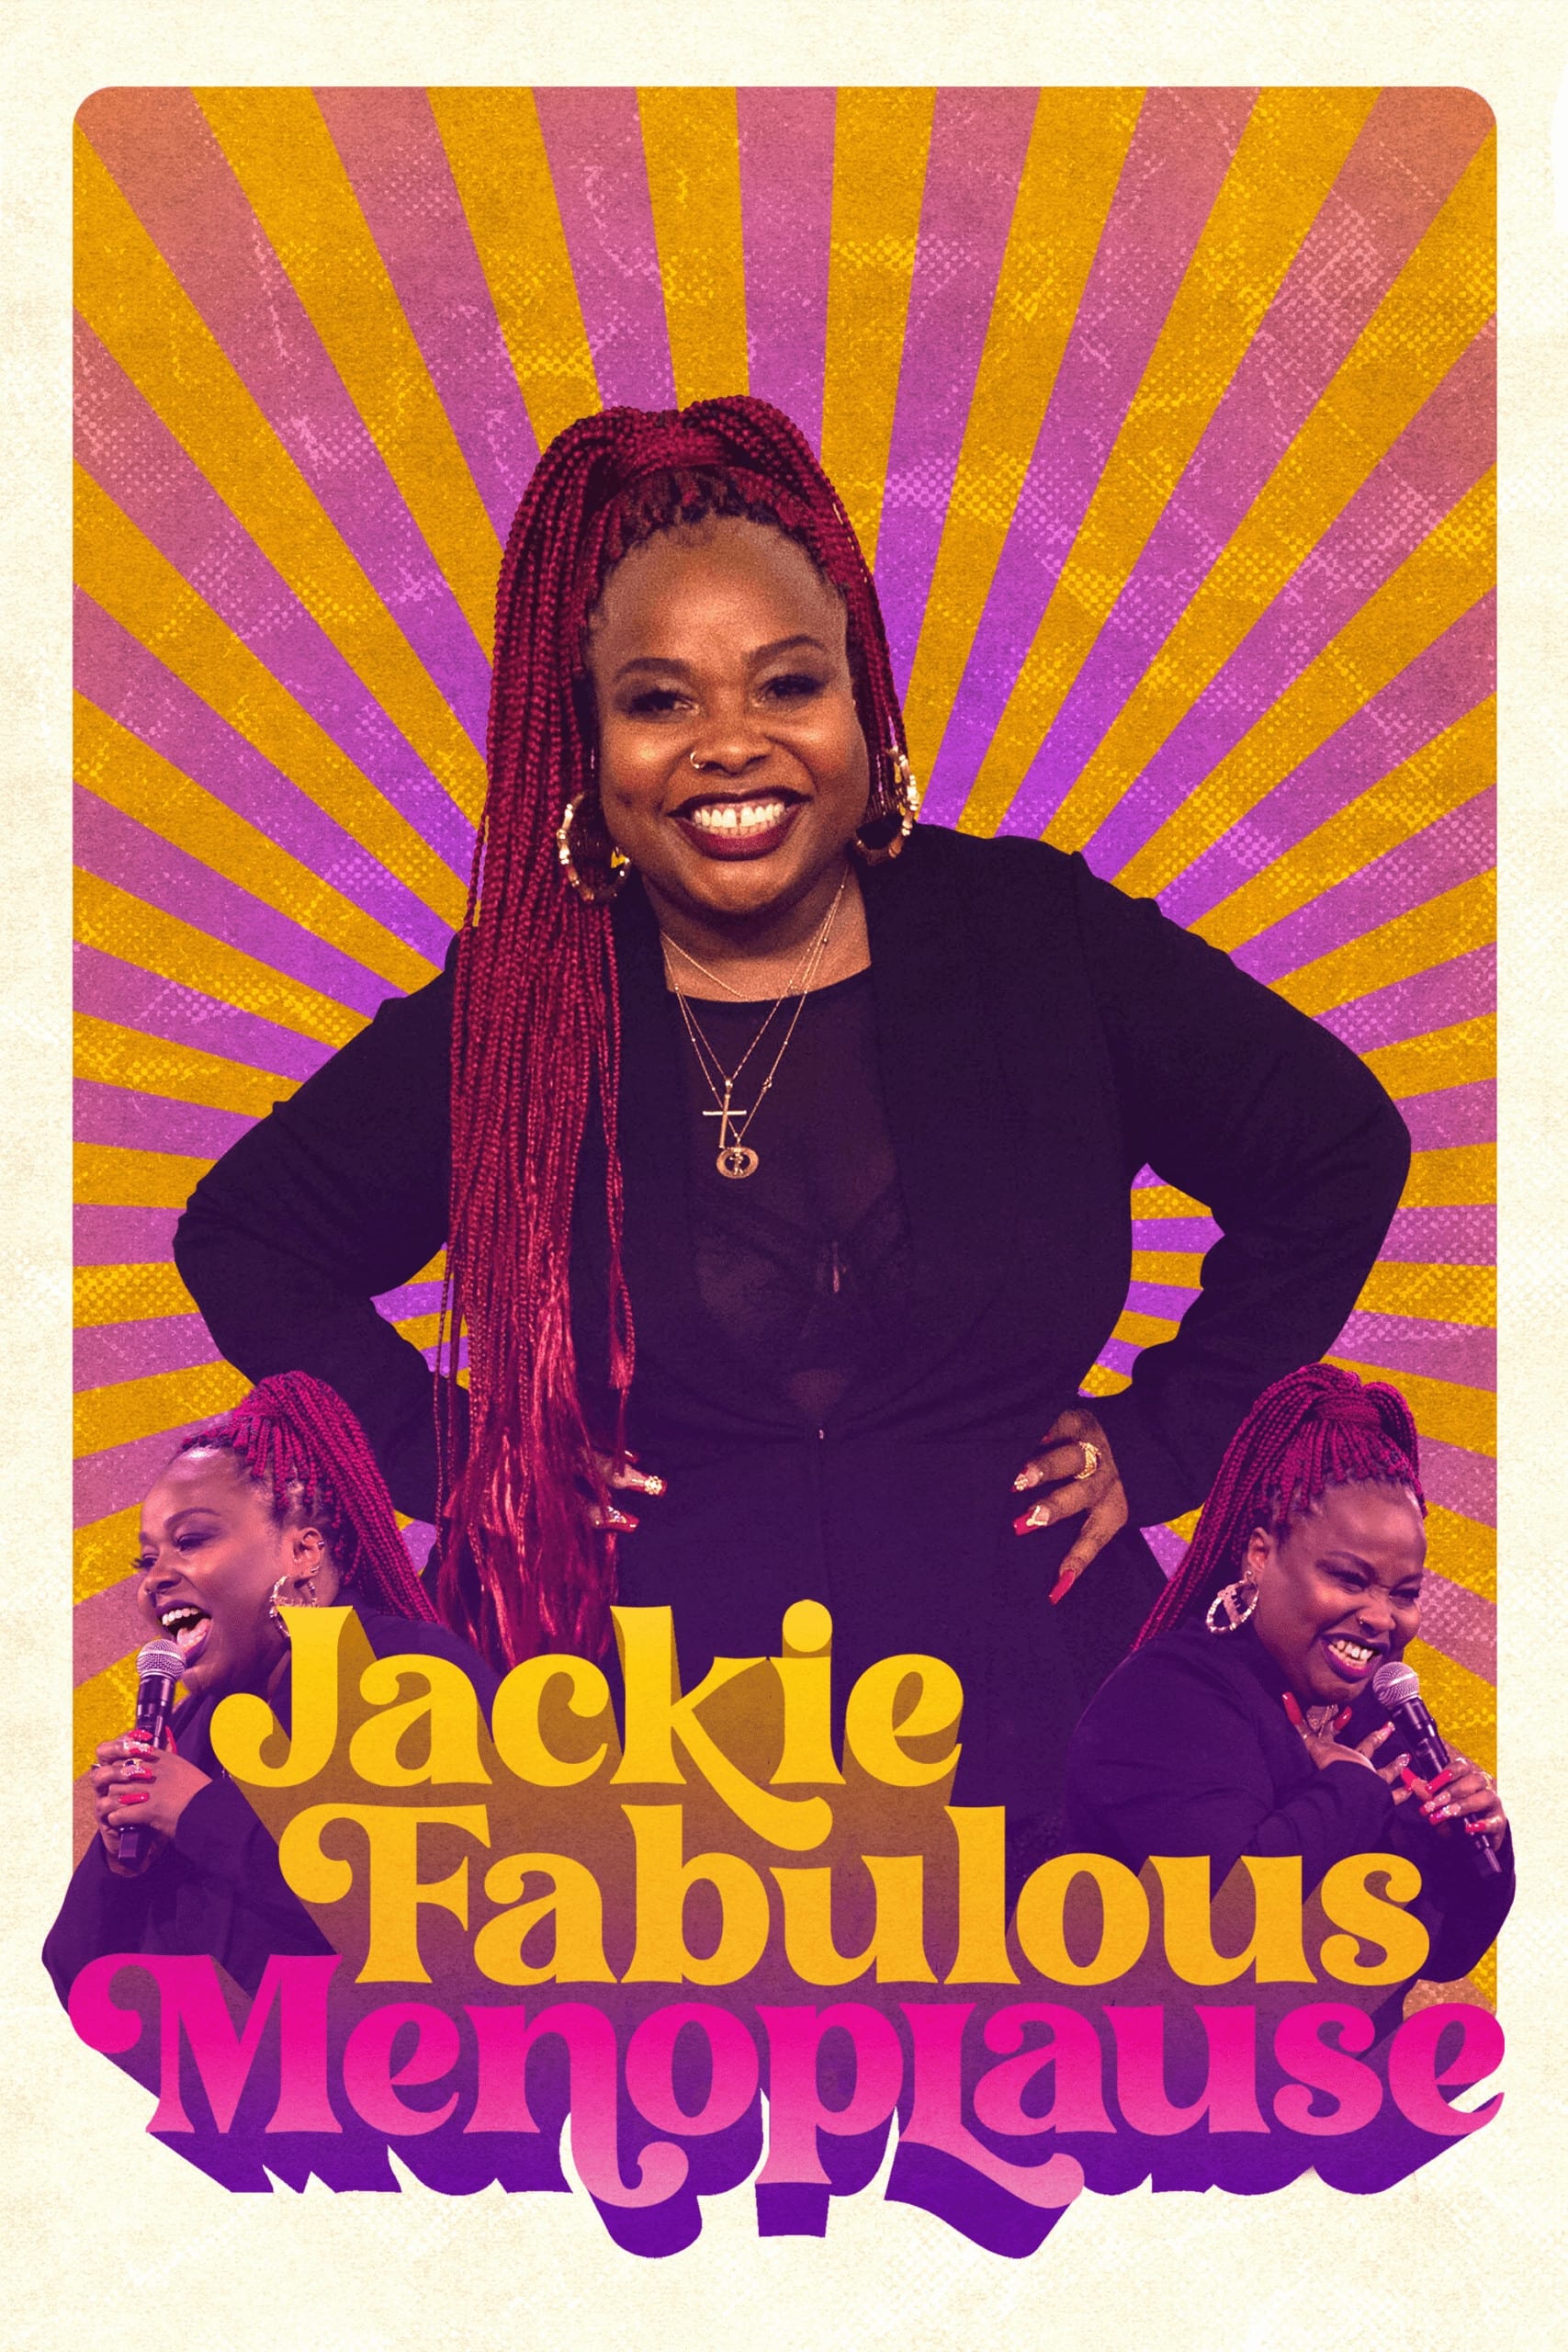 Jackie Fabulous: Menoplause